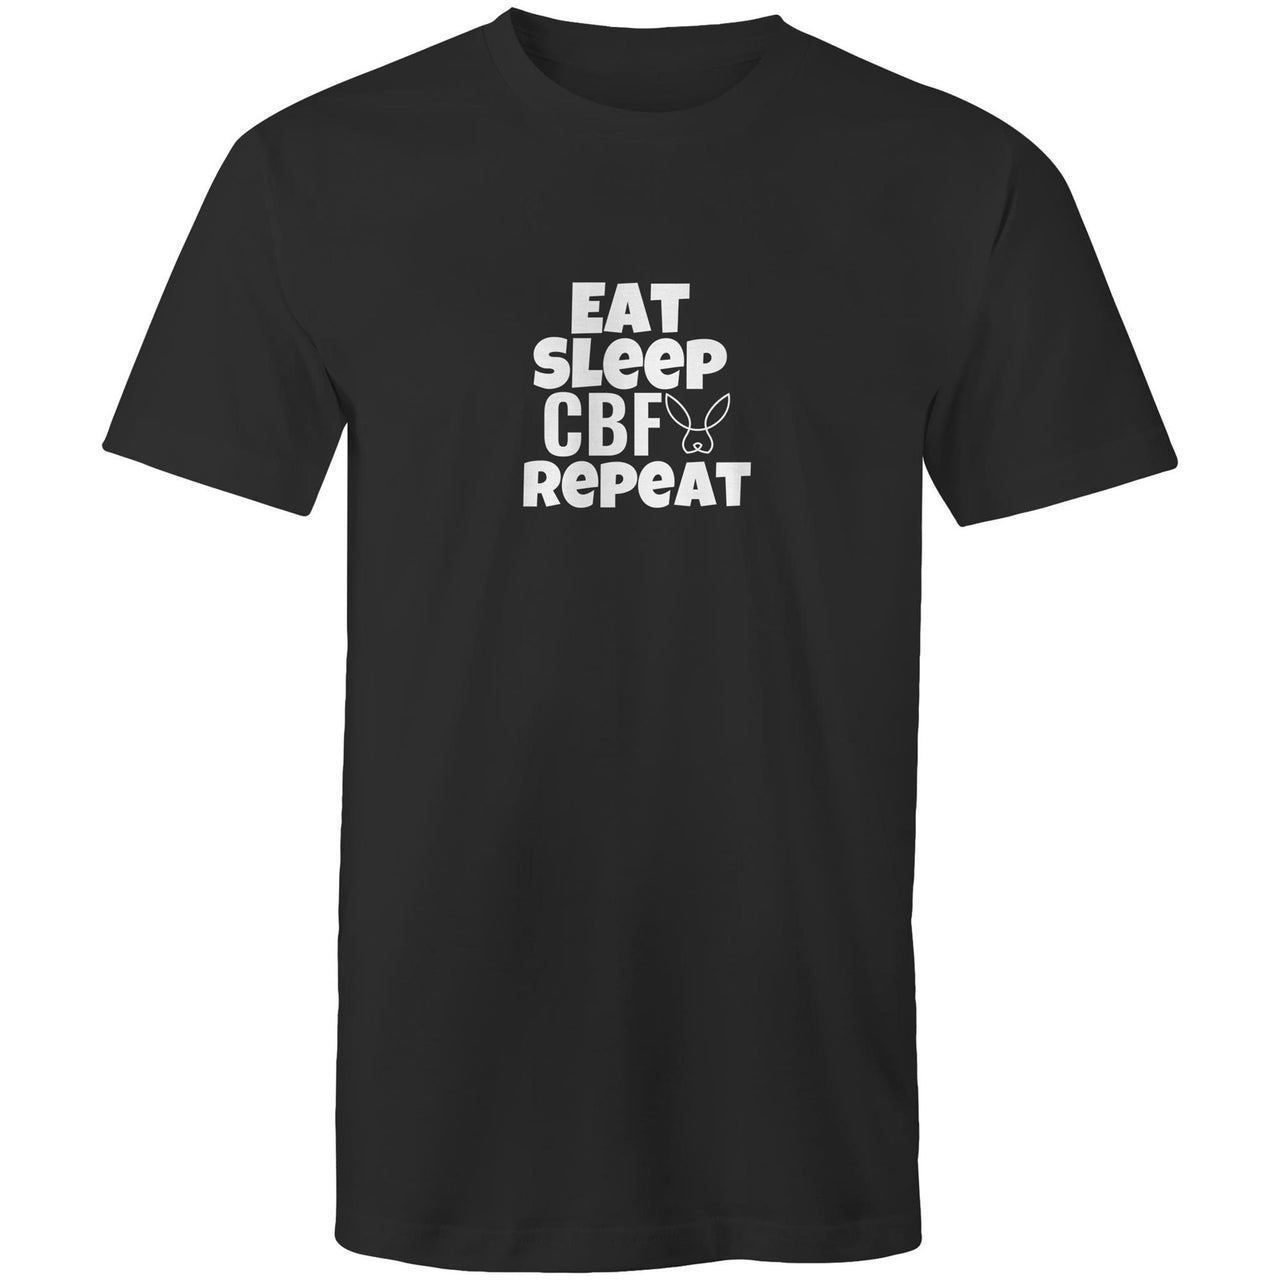 Eat Sleep CBF Repeat Crew Black T-Shirt by CBF Clothing